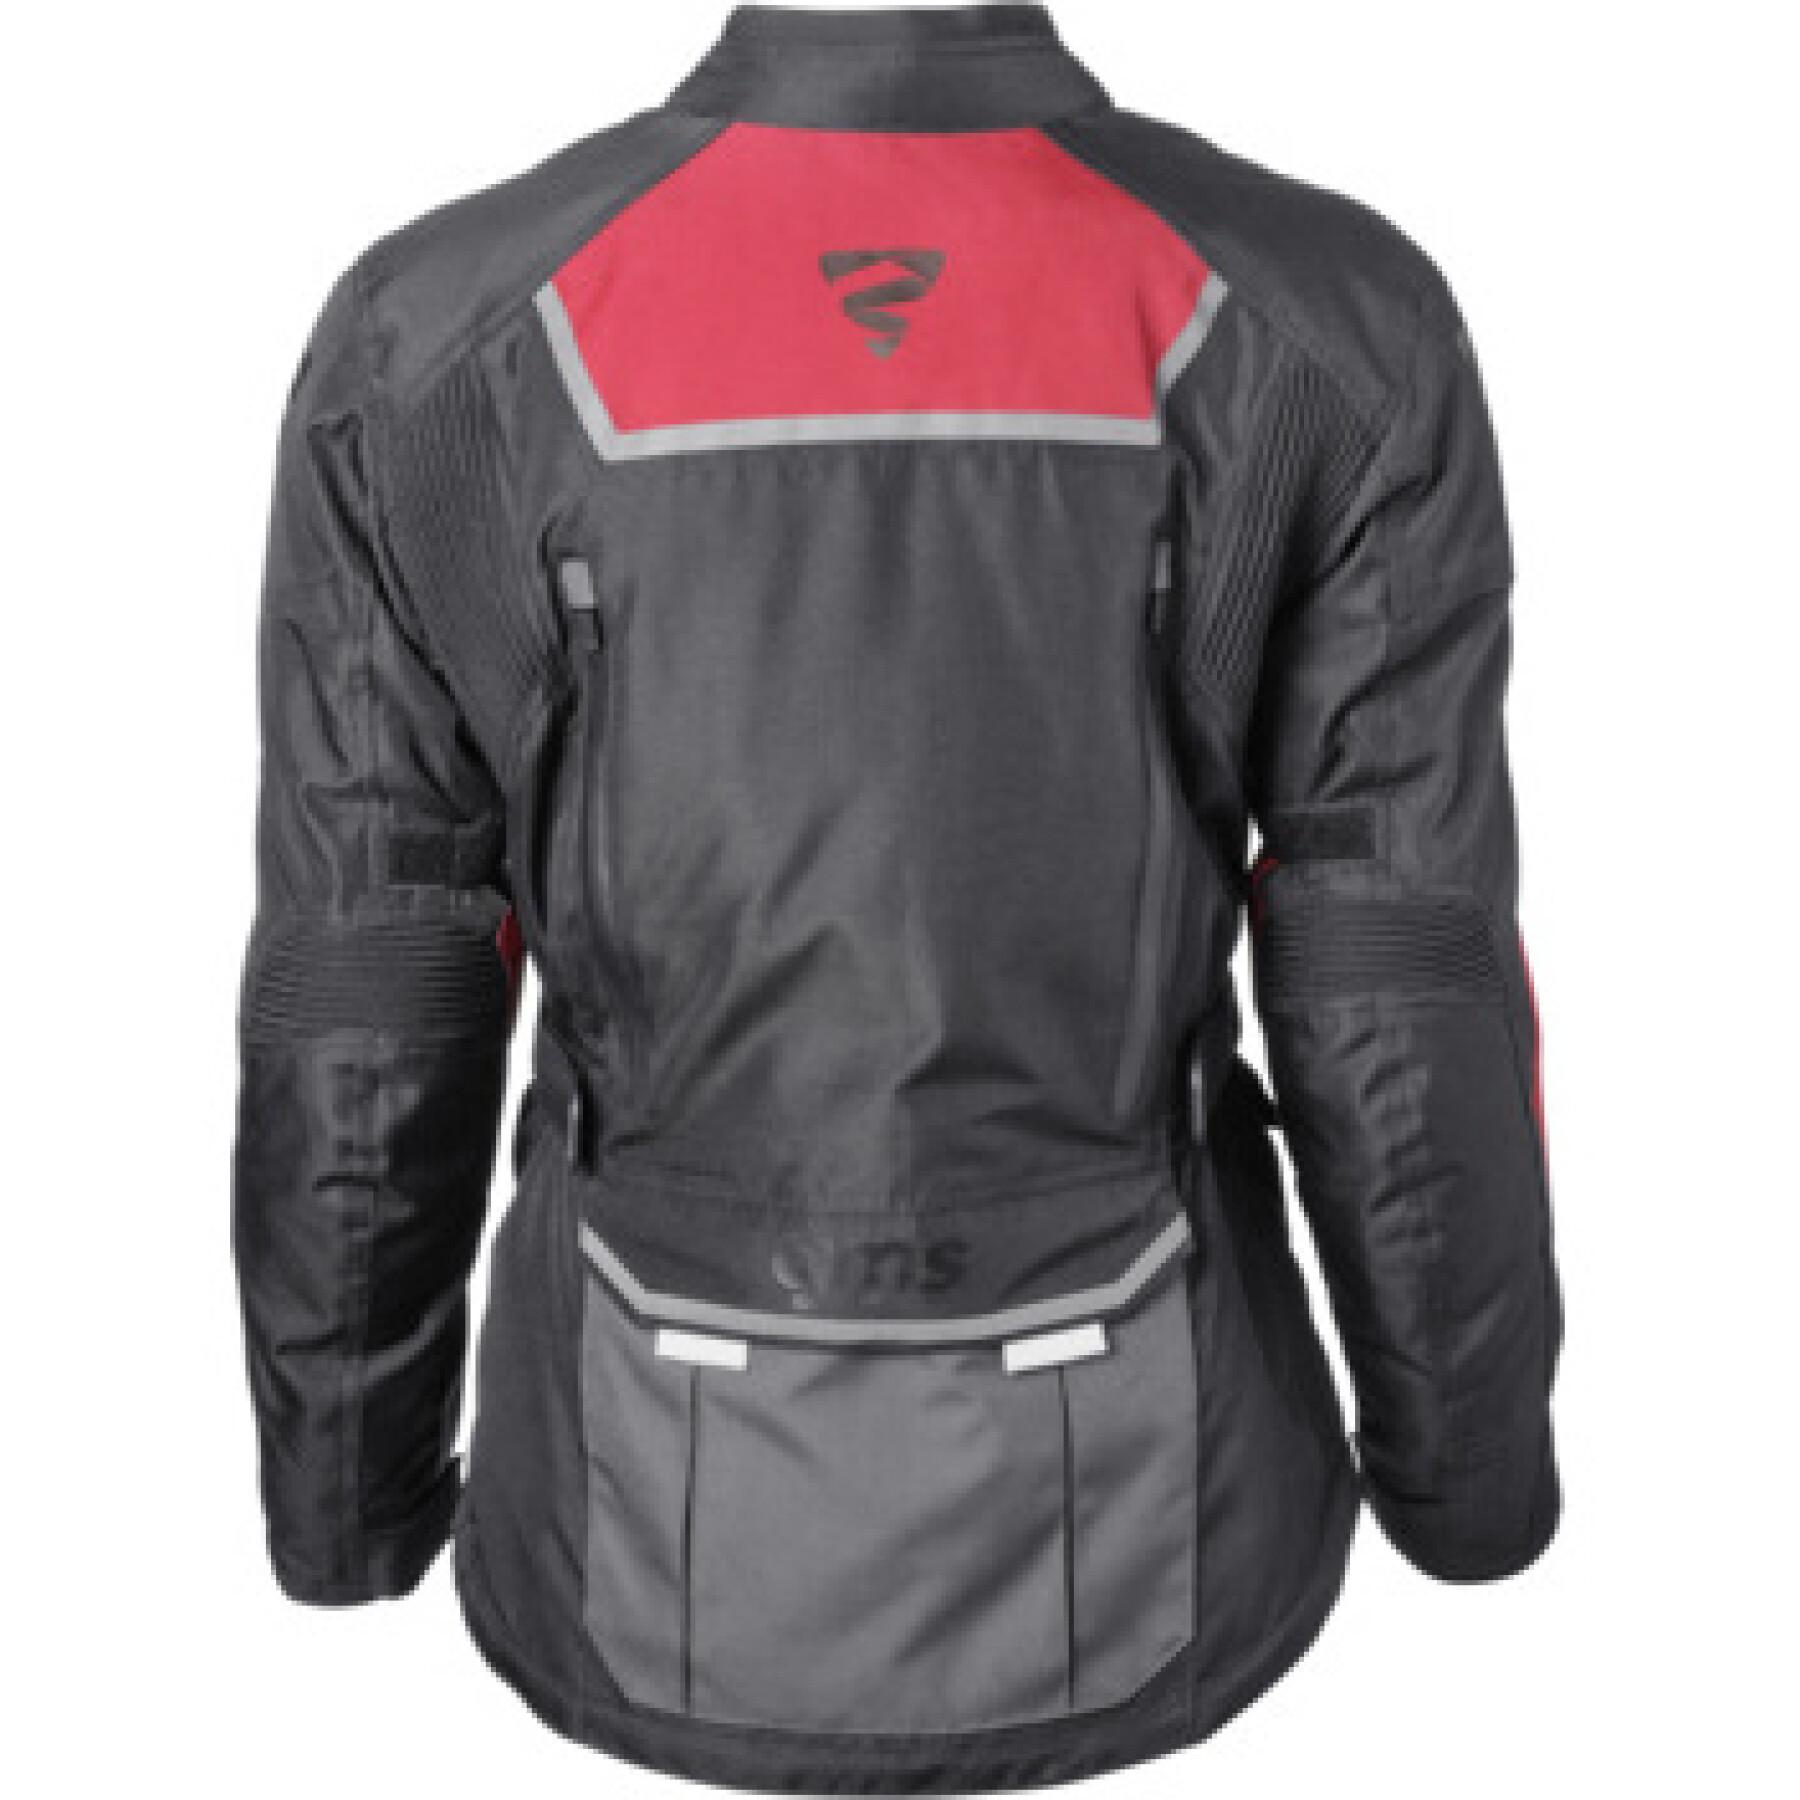 Women's motorcycle jacket GMS Twister Neo WP